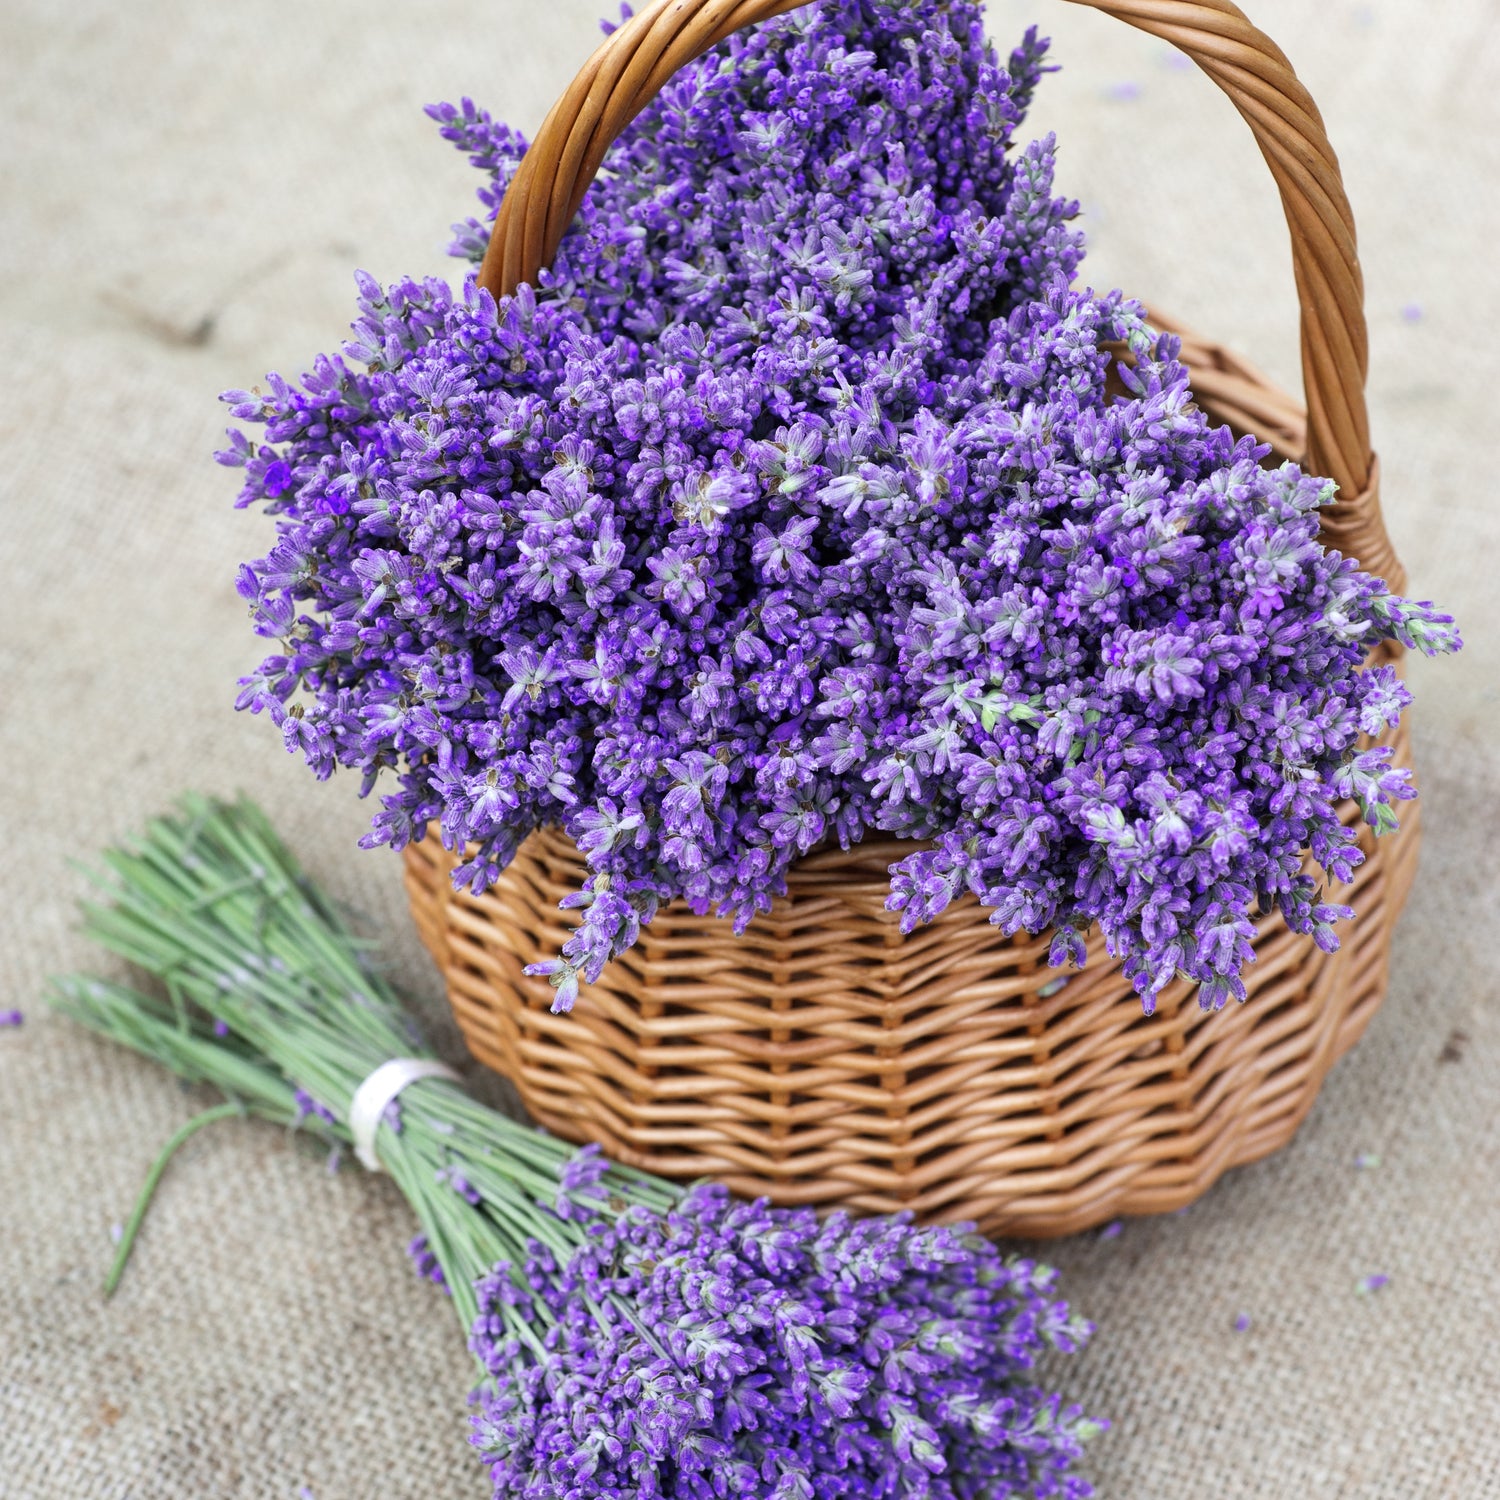 Organic Lavender Seeds